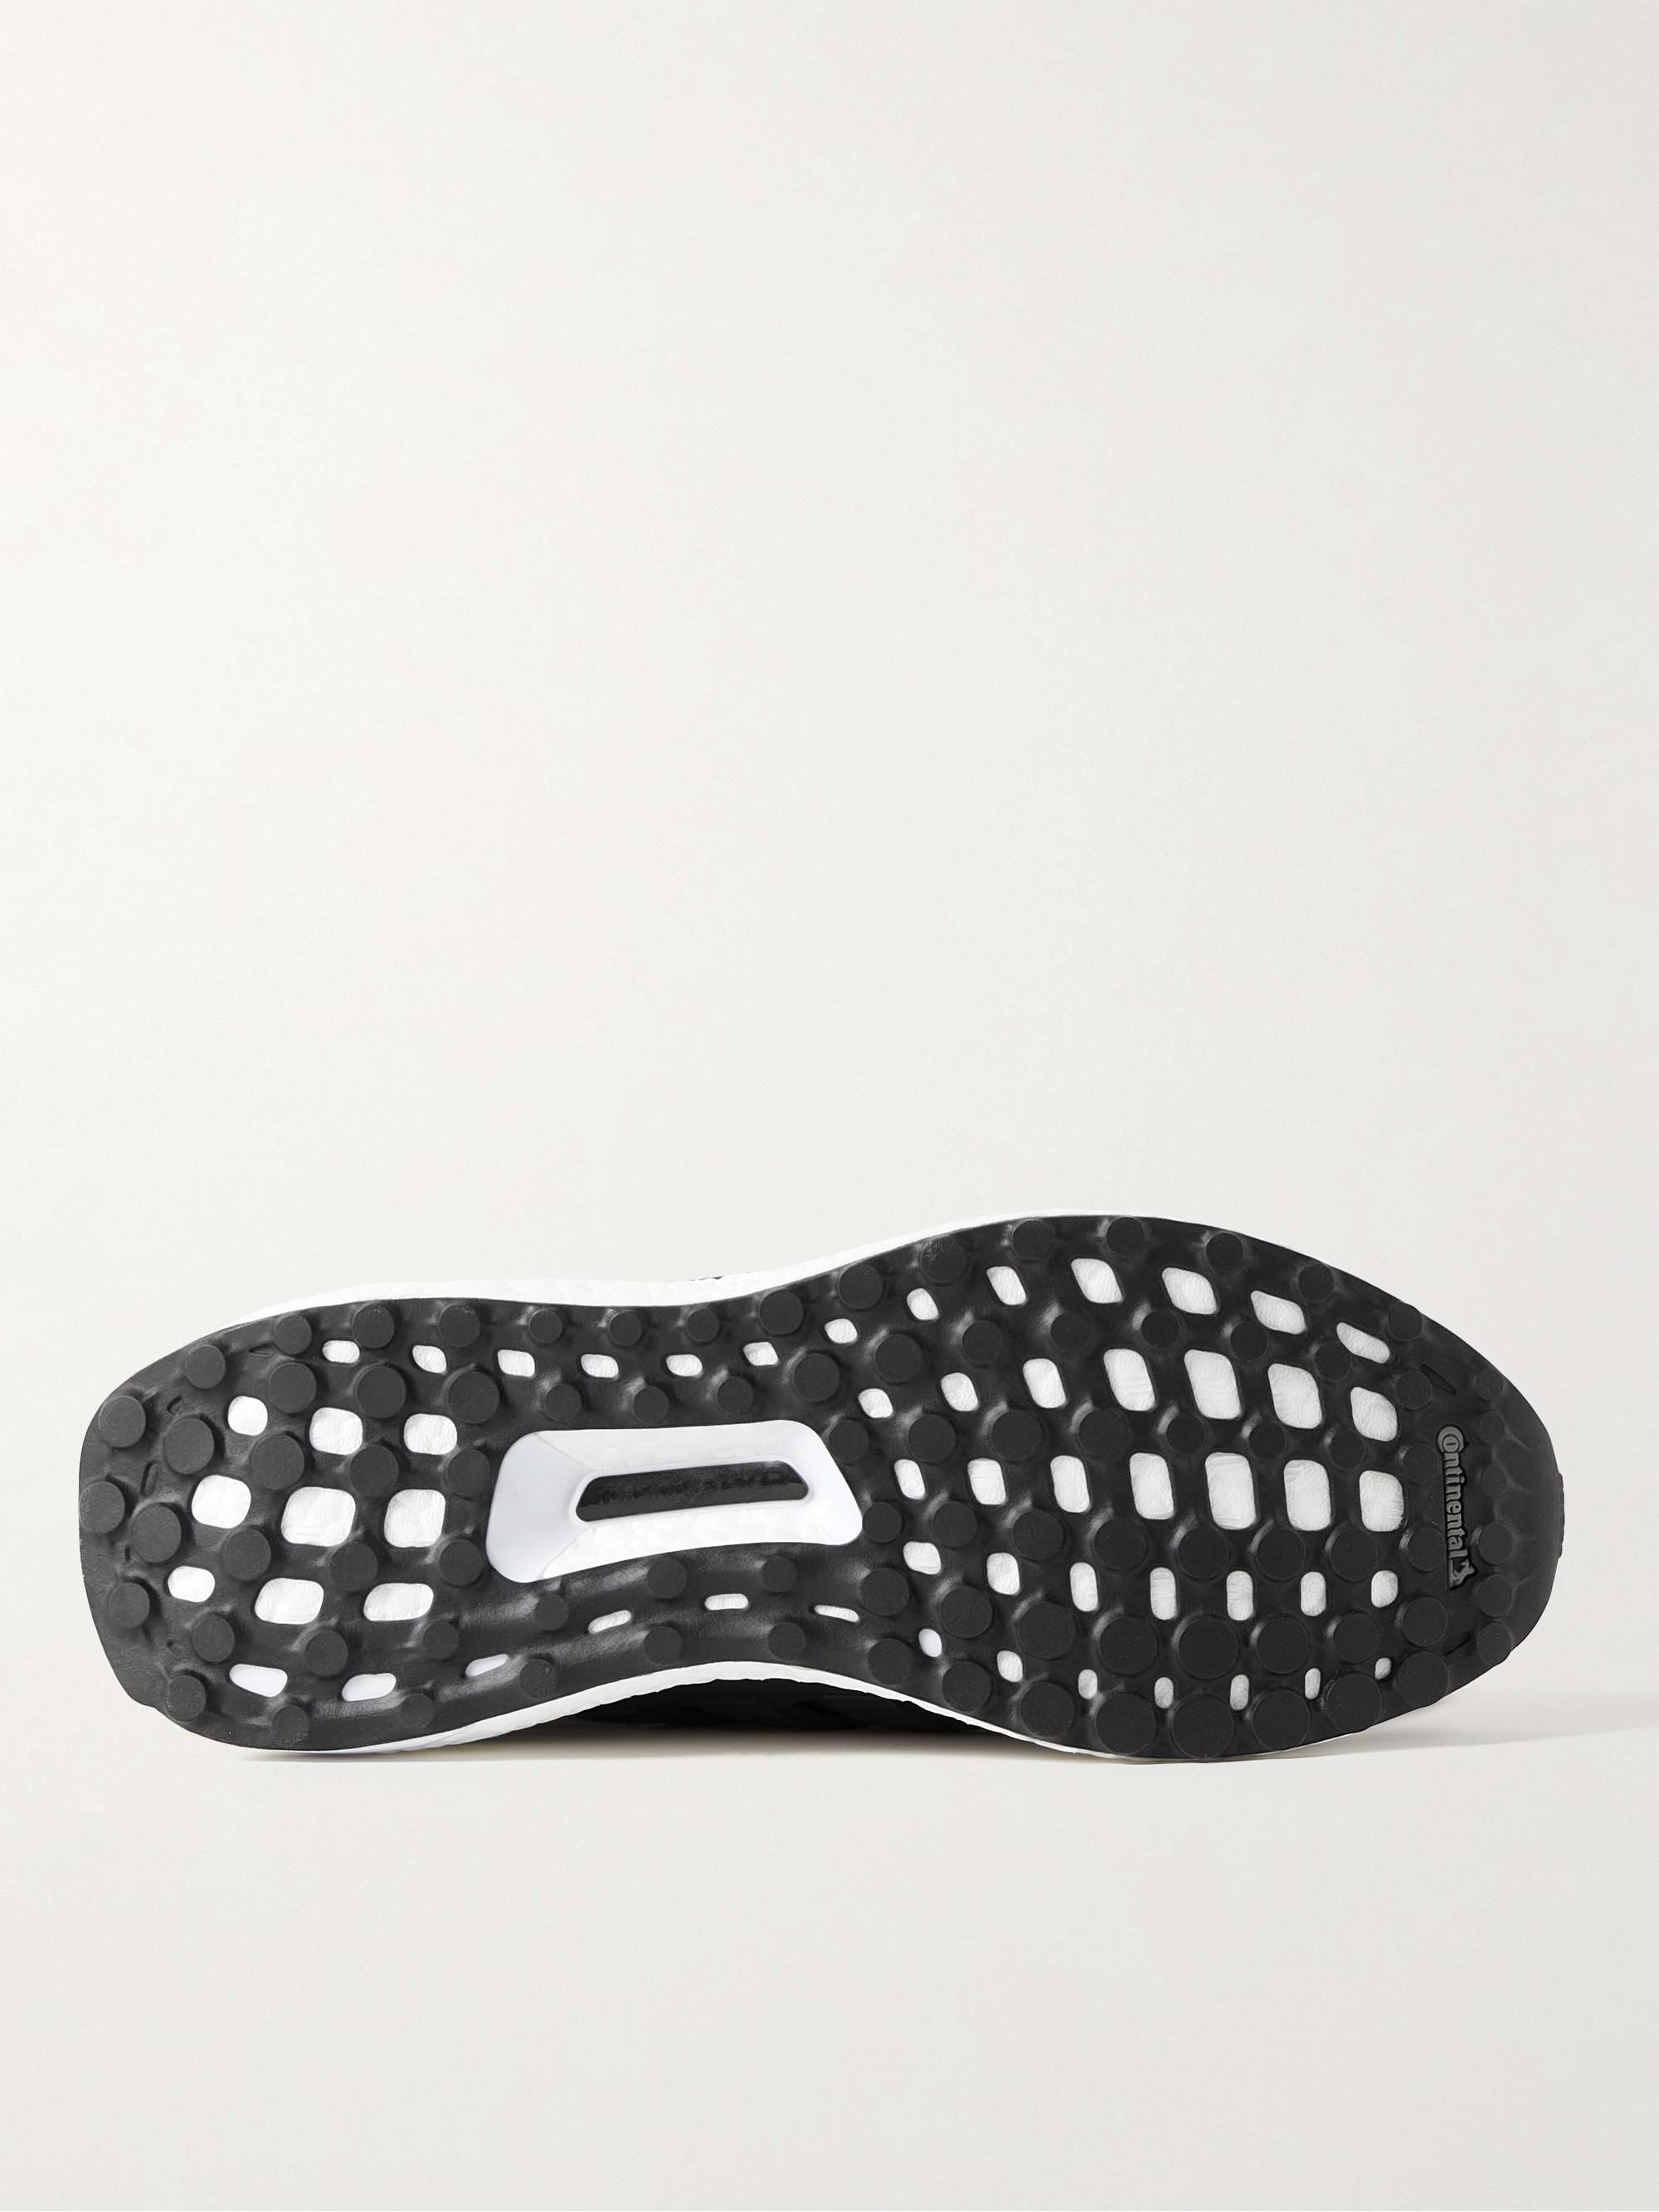 ADIDAS SPORT UltraBoost 4.0 DNA Rubber-Trimmed Primeknit Running Sneakers